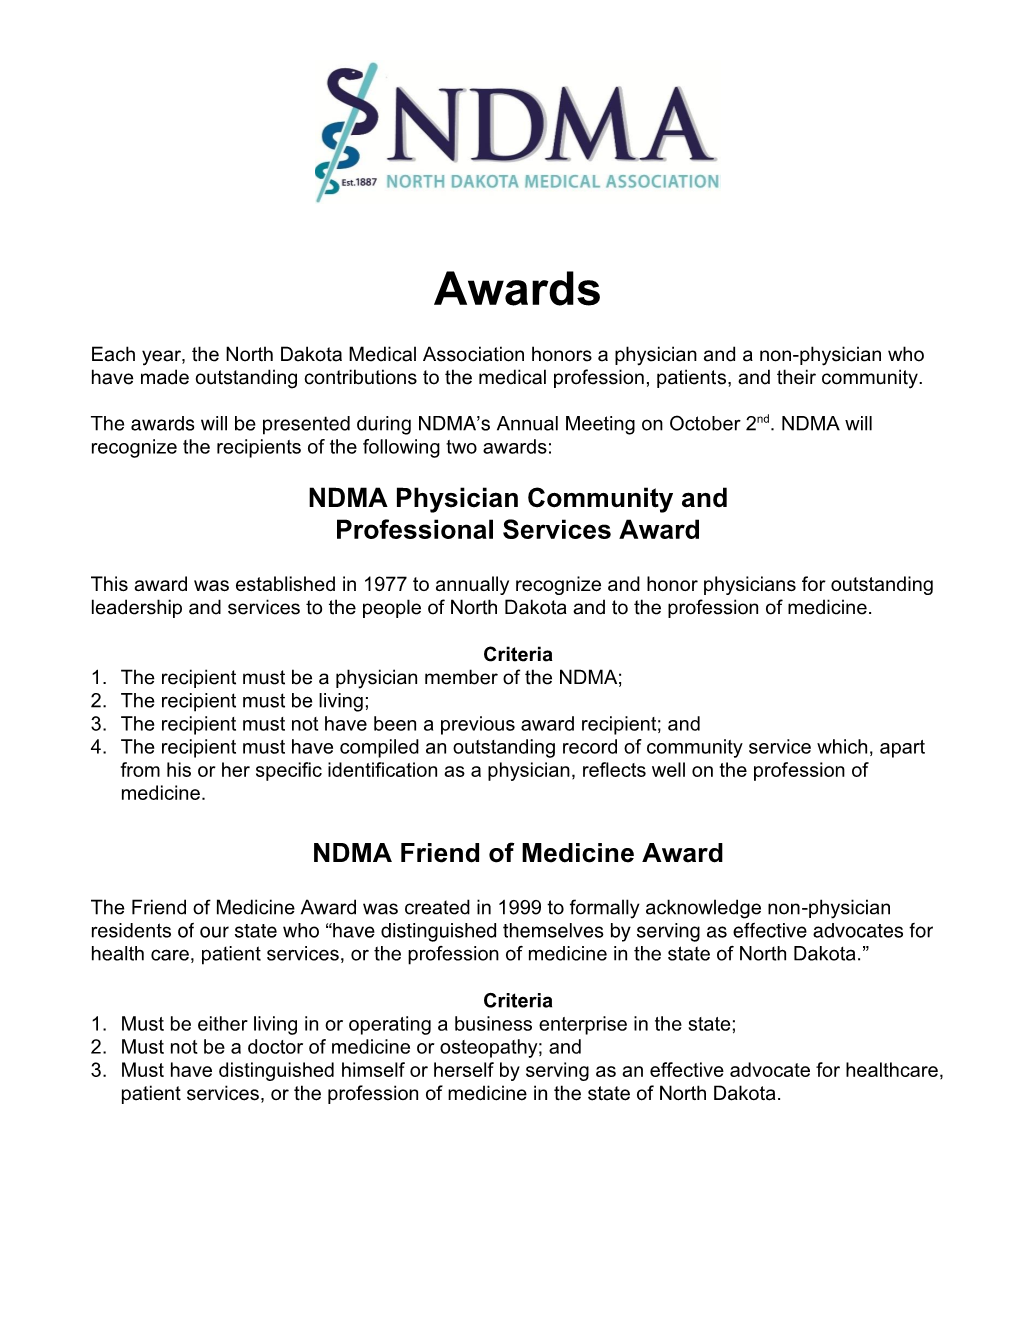 North Dakota Medical Association Awards